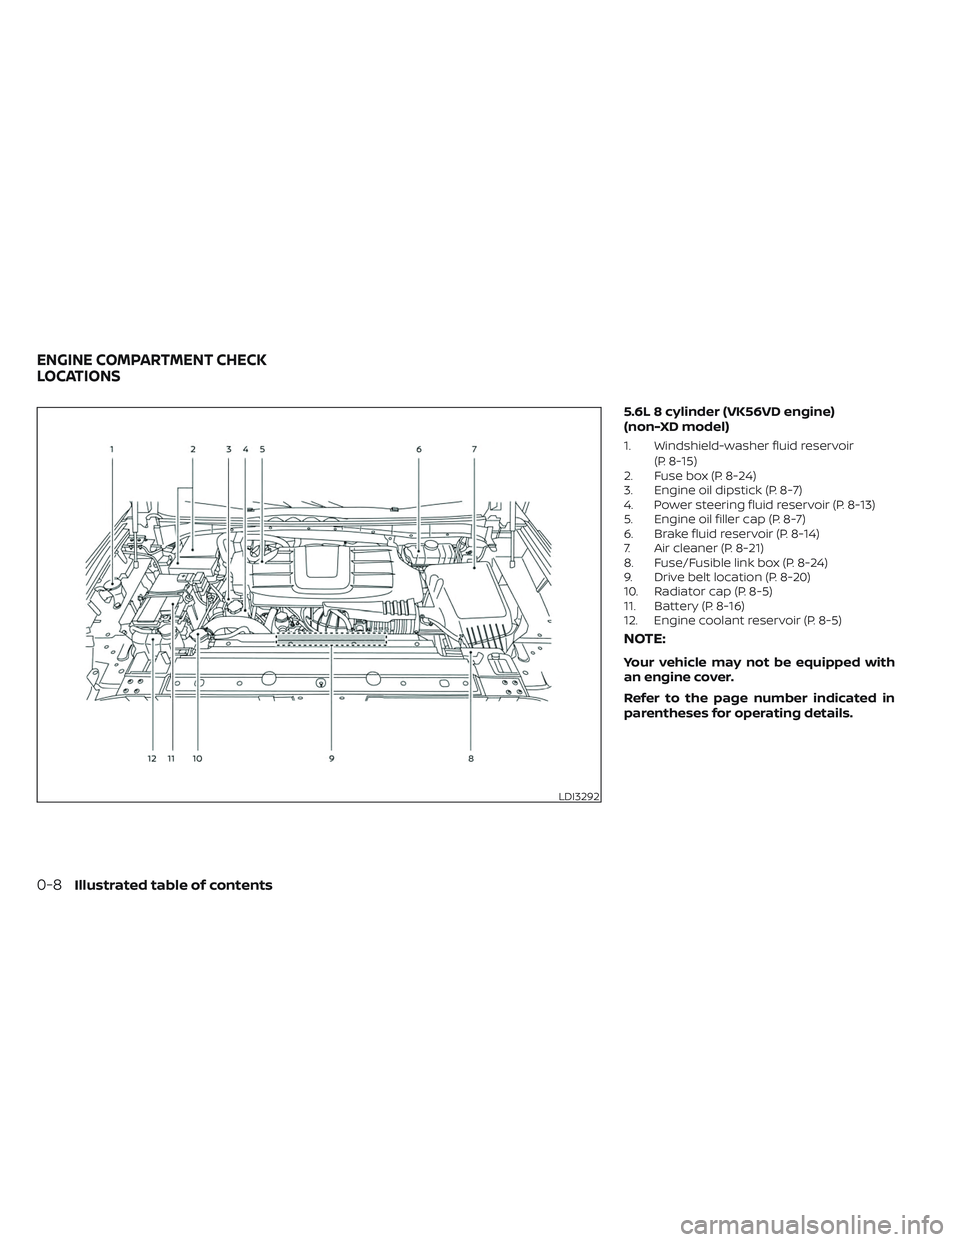 NISSAN TITAN 2022  Owners Manual 5.6L 8 cylinder (VK56VD engine)
(non-XD model)
1. Windshield-washer fluid reservoir(P. 8-15)
2. Fuse box (P. 8-24)
3. Engine oil dipstick (P. 8-7)
4. Power steering fluid reservoir (P. 8-13)
5. Engine